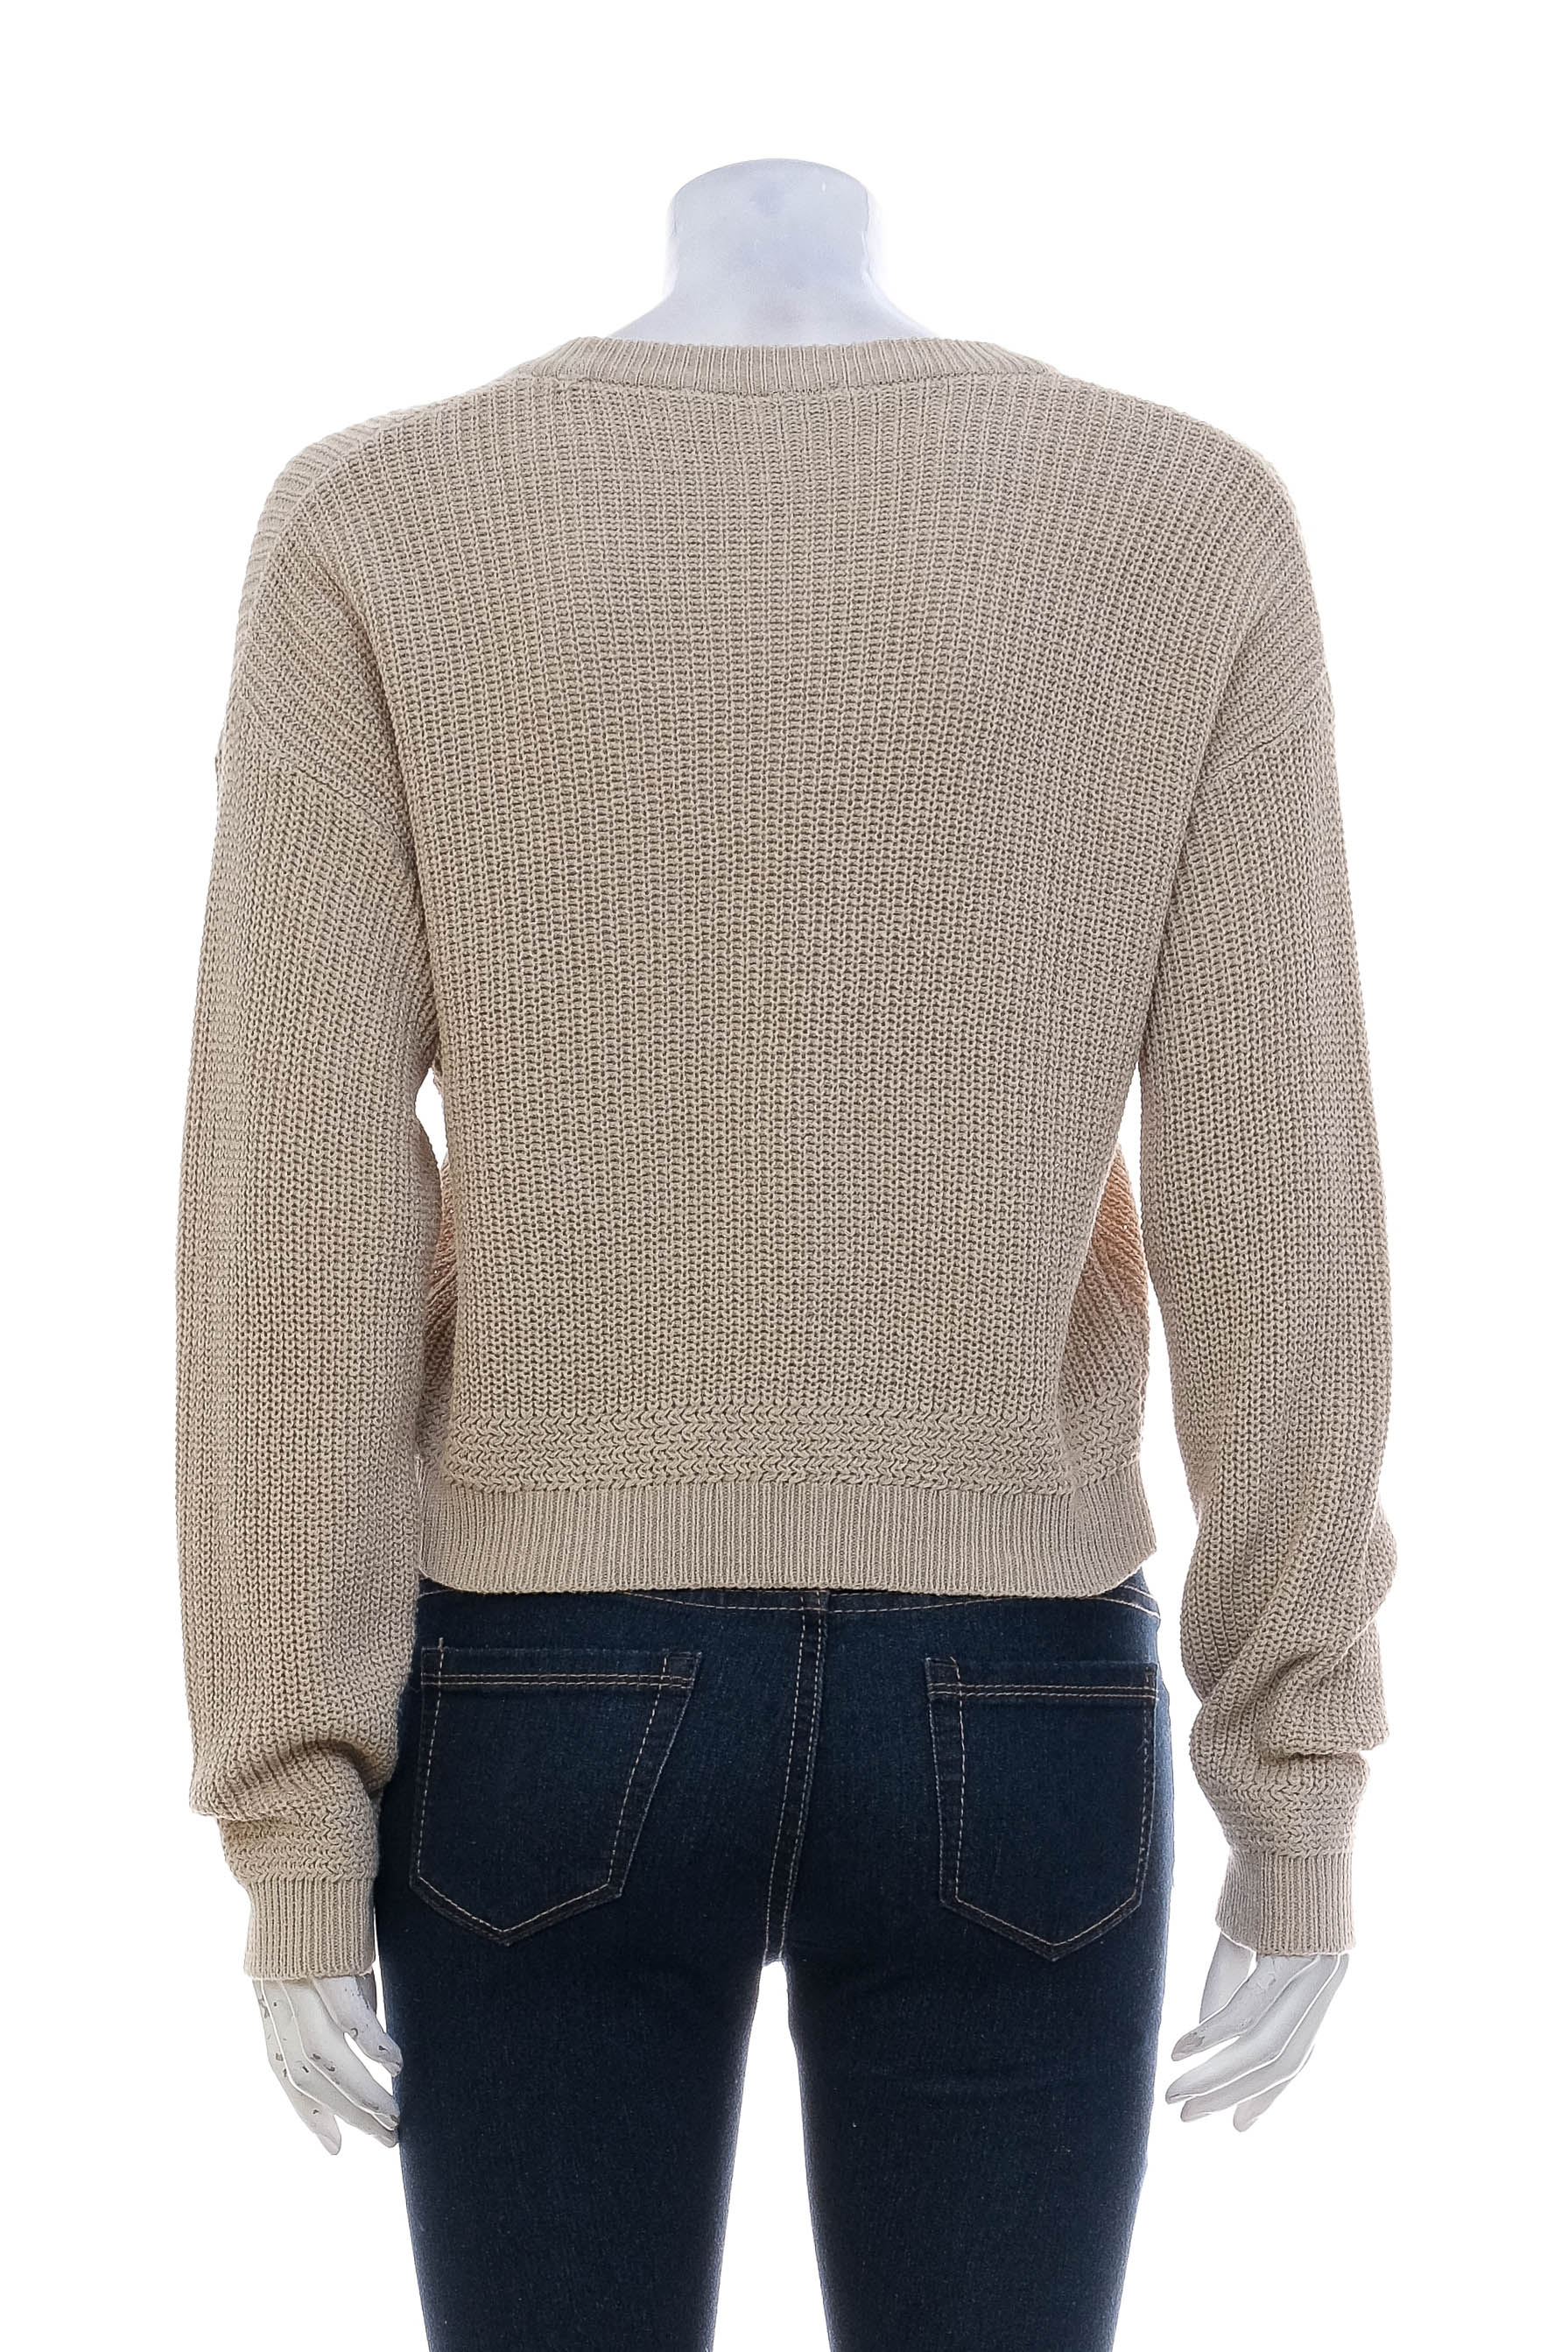 Women's sweater - Pimkie - 1